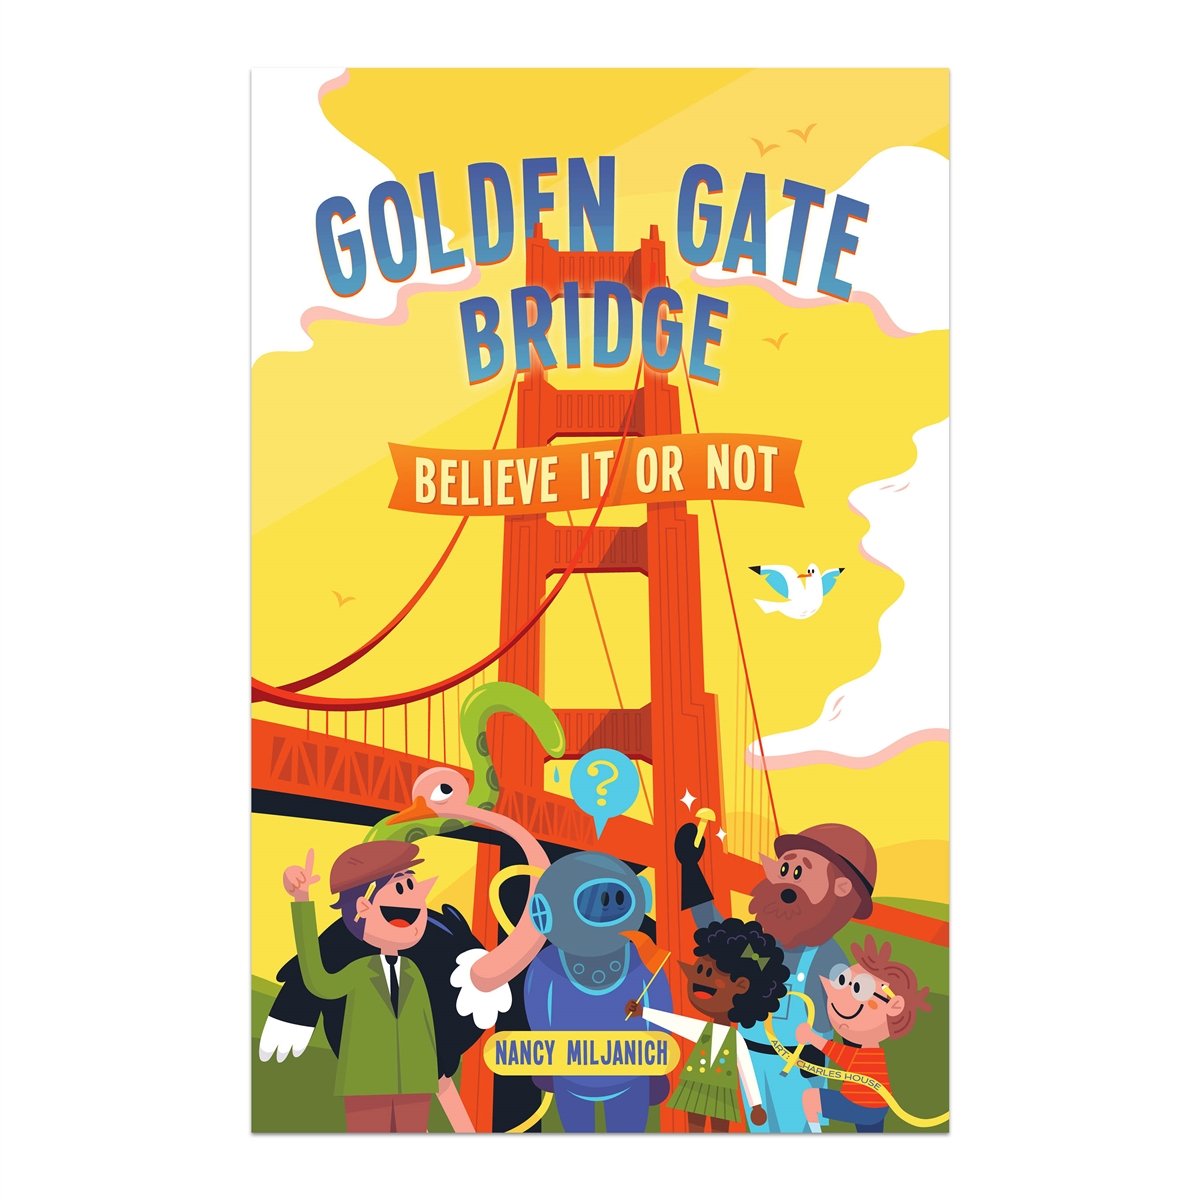 Golden Gate Bridge Believe it or Not book by Nancy Miljanich, stories of San Francisco's famous bridge.